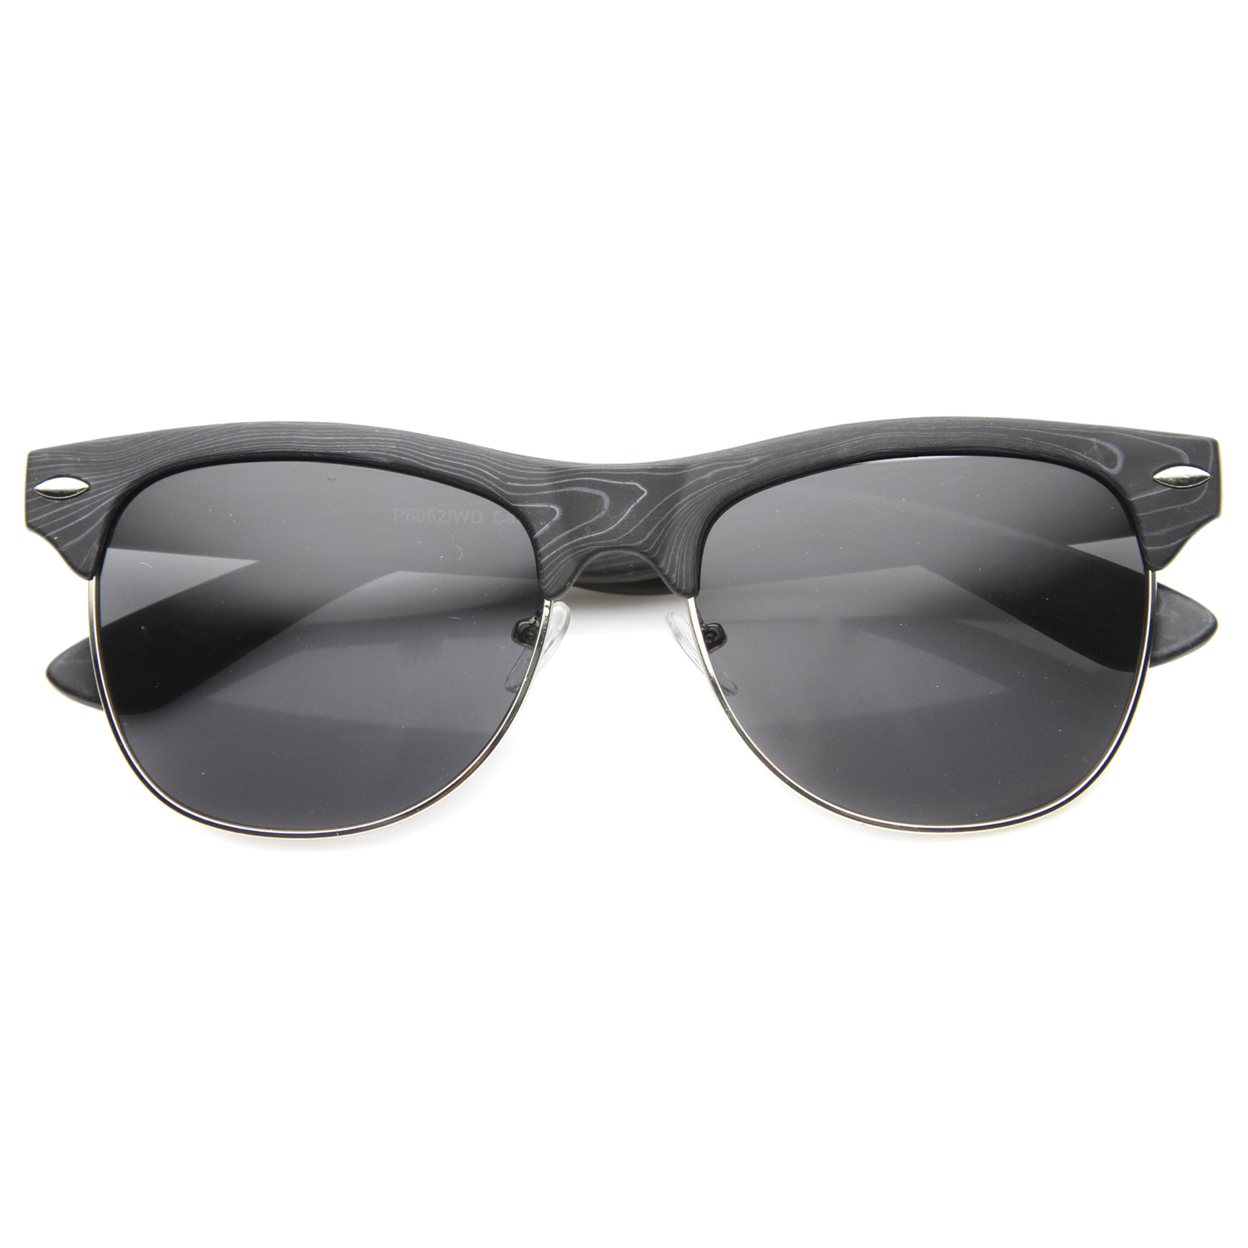 Mens Semi-Rimless Sunglasses With UV400 Protected Composite Lens 9959 - Grey / Smoke